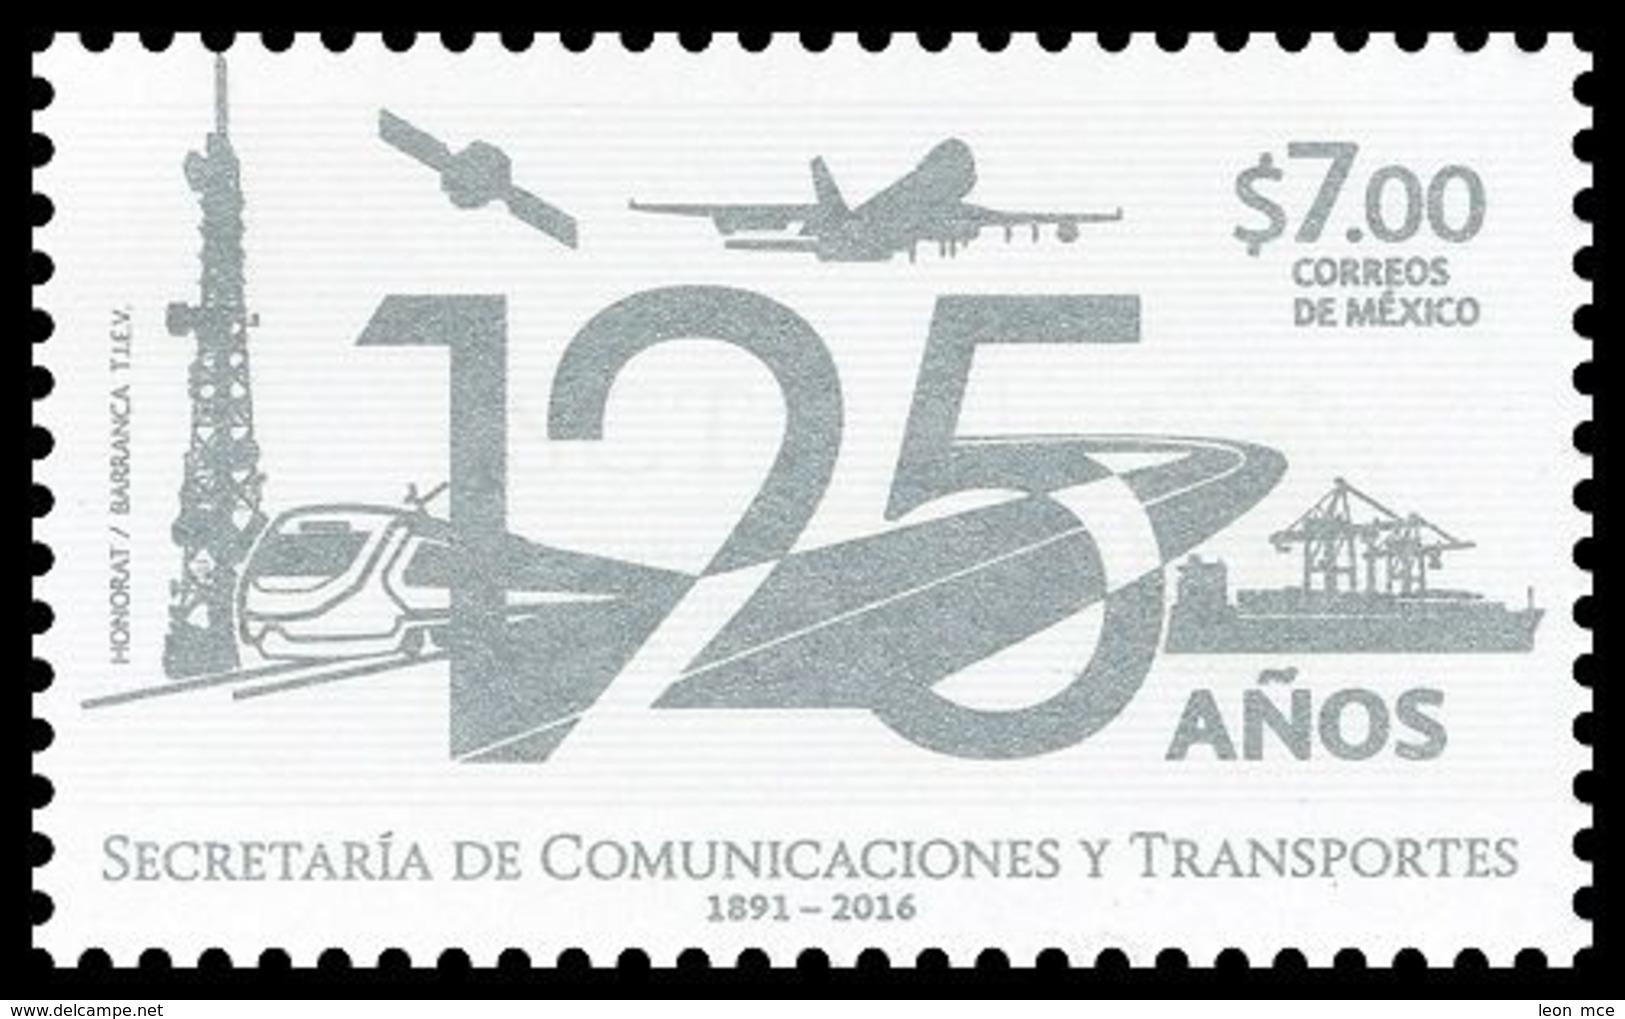 2016 MÉXICO Secretaría De Comunicaciones Y Transportes MNH COMUNICATIONS AND TRANSPORTATIONS, CONTROL TOWER, TRAIN - México